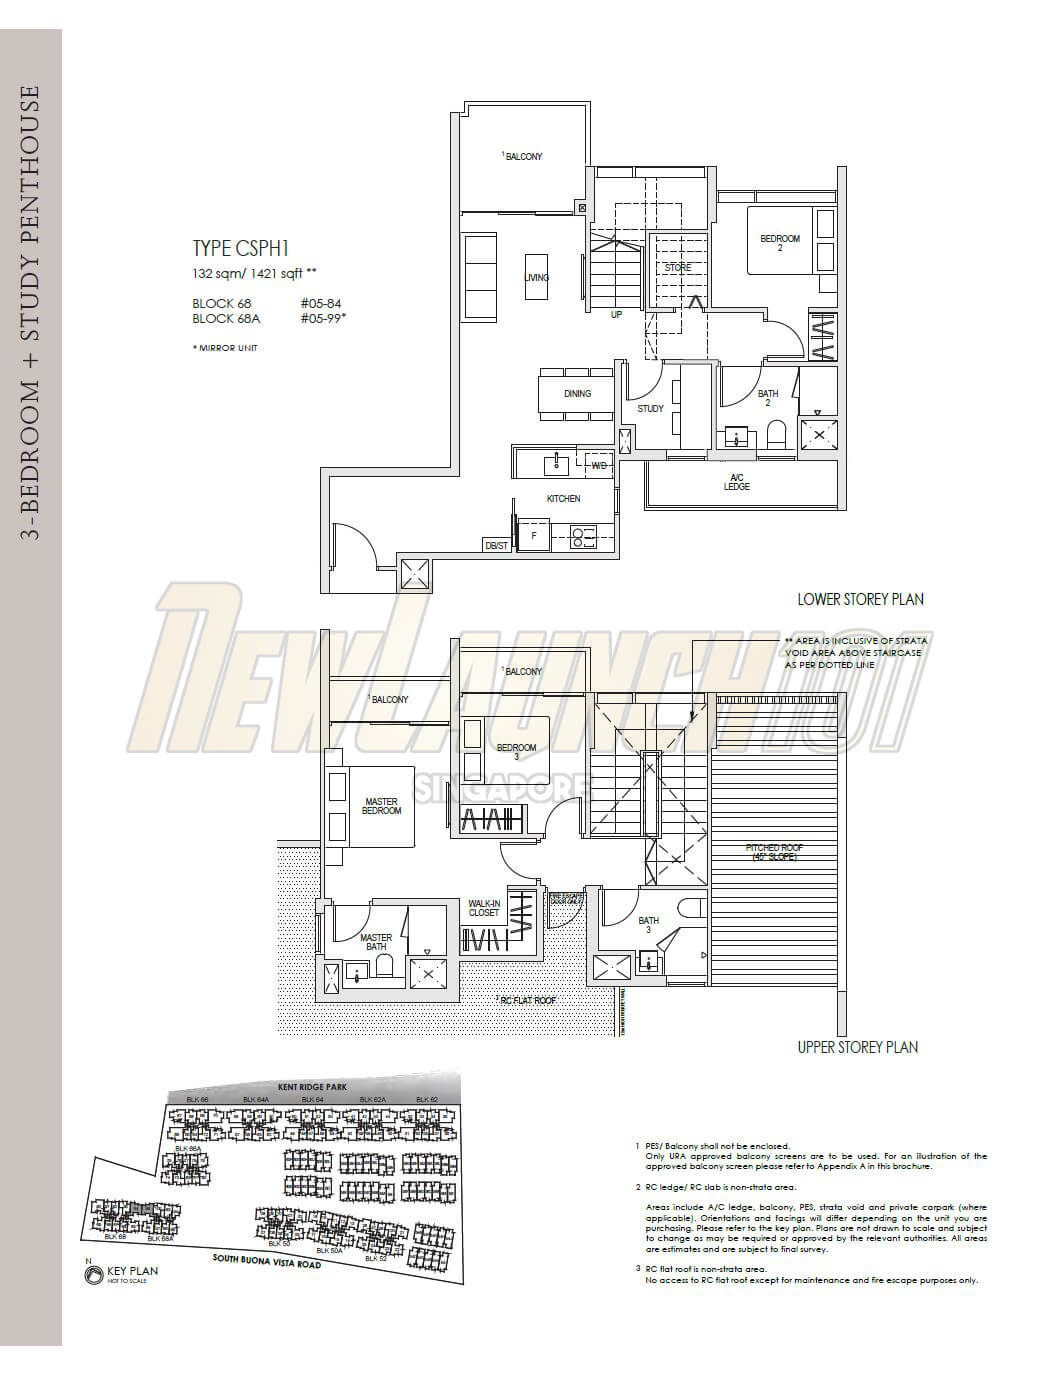 Kent Ridge Hill Residences Floor Plan 3-Bedroom Study PH Type CSPH1